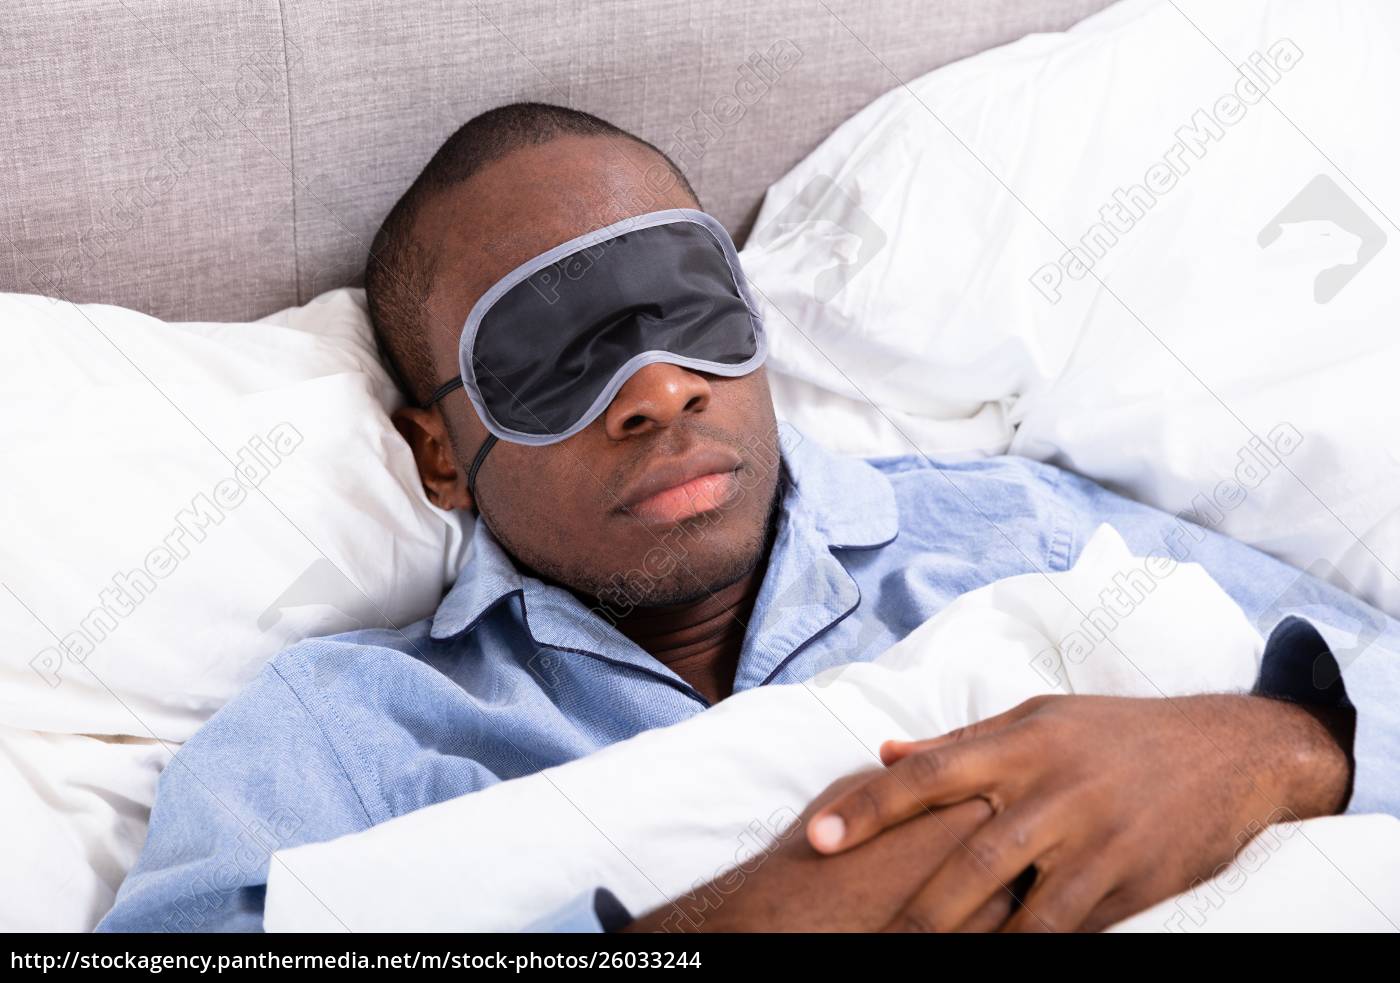 sleeping with a sleep mask